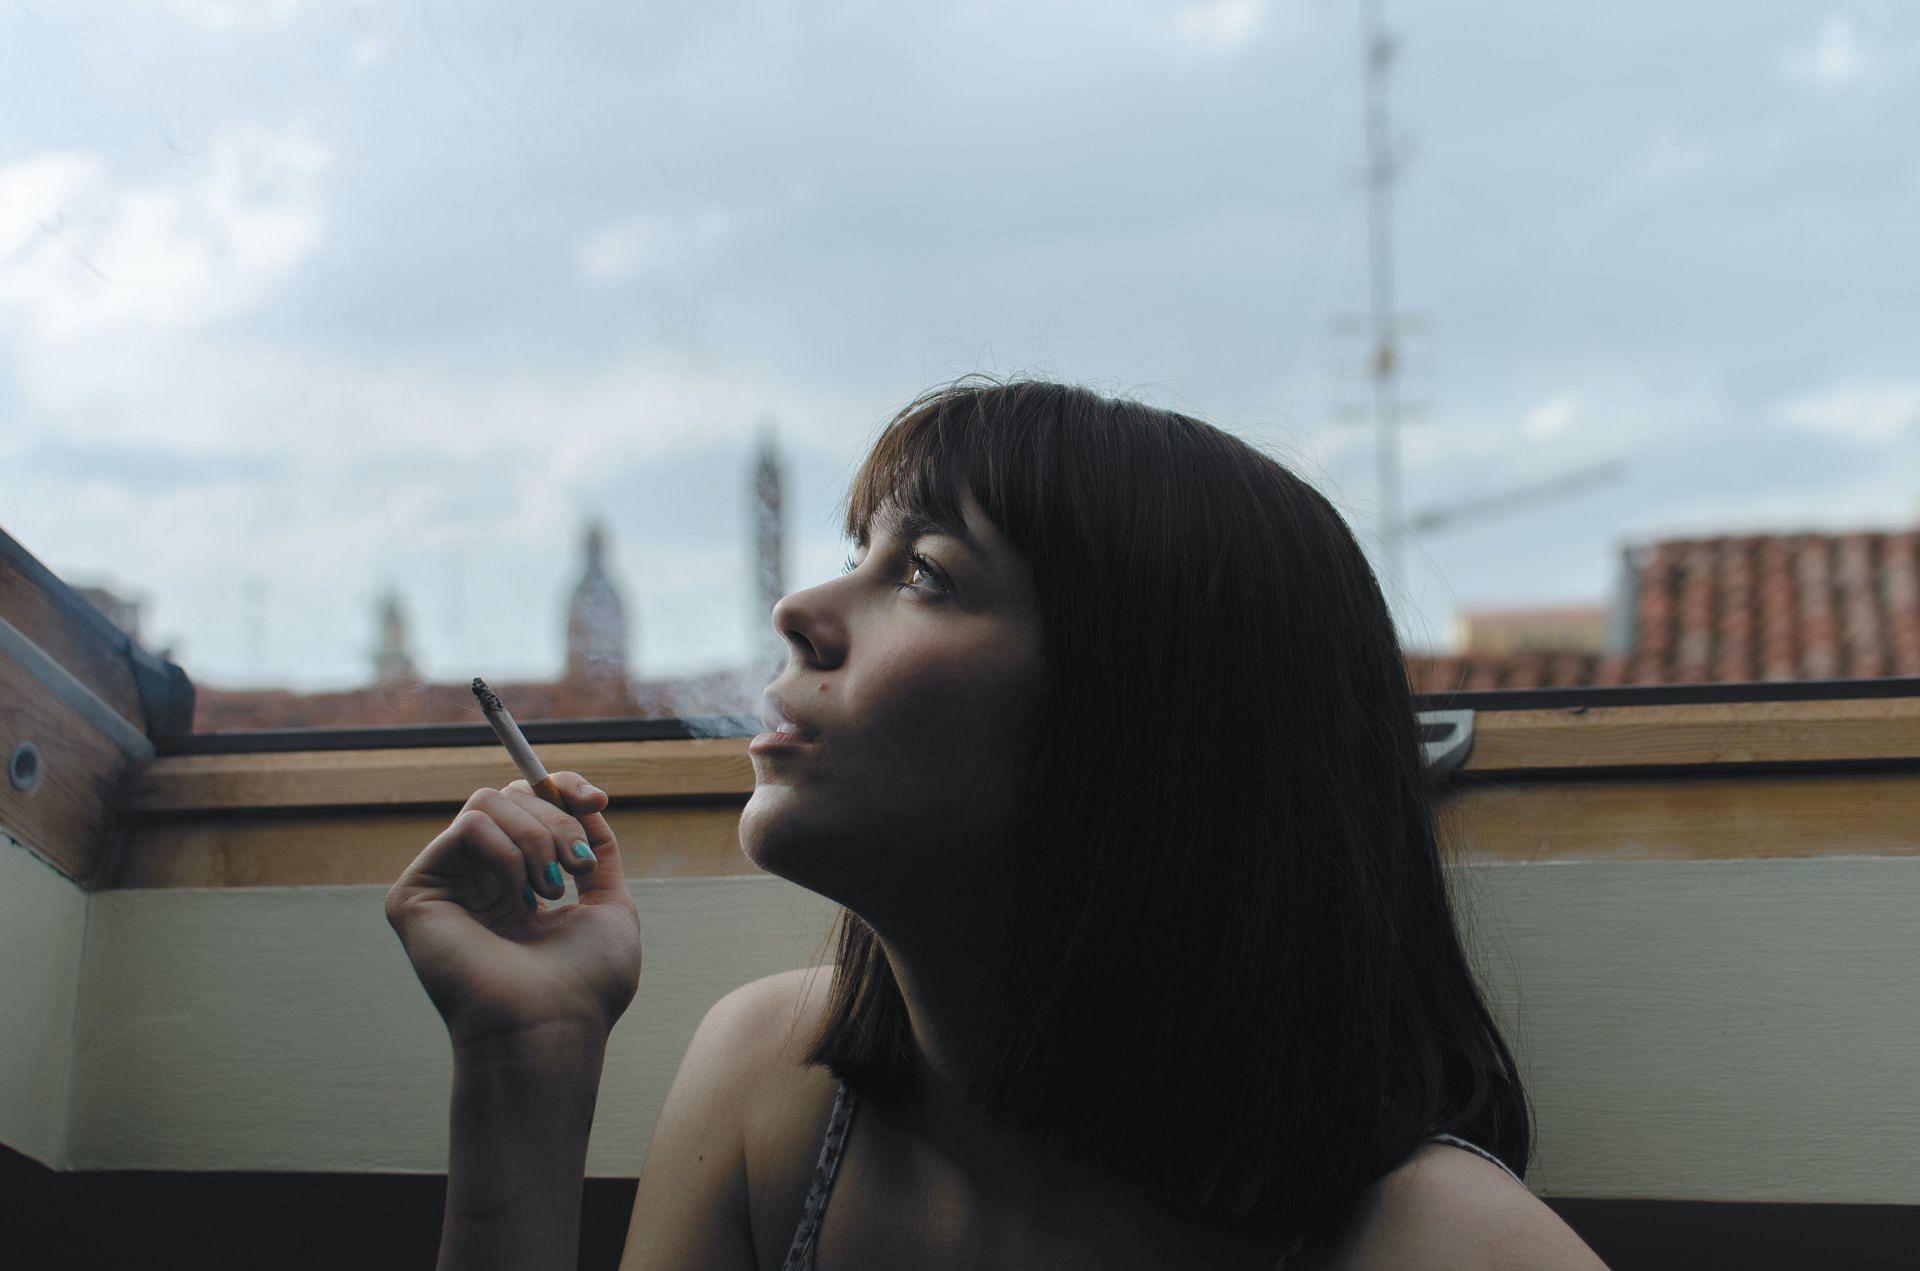 Stopping smoking may cause withdrawal symptoms. (Image via Unsplash/ Riccardo Fissore)